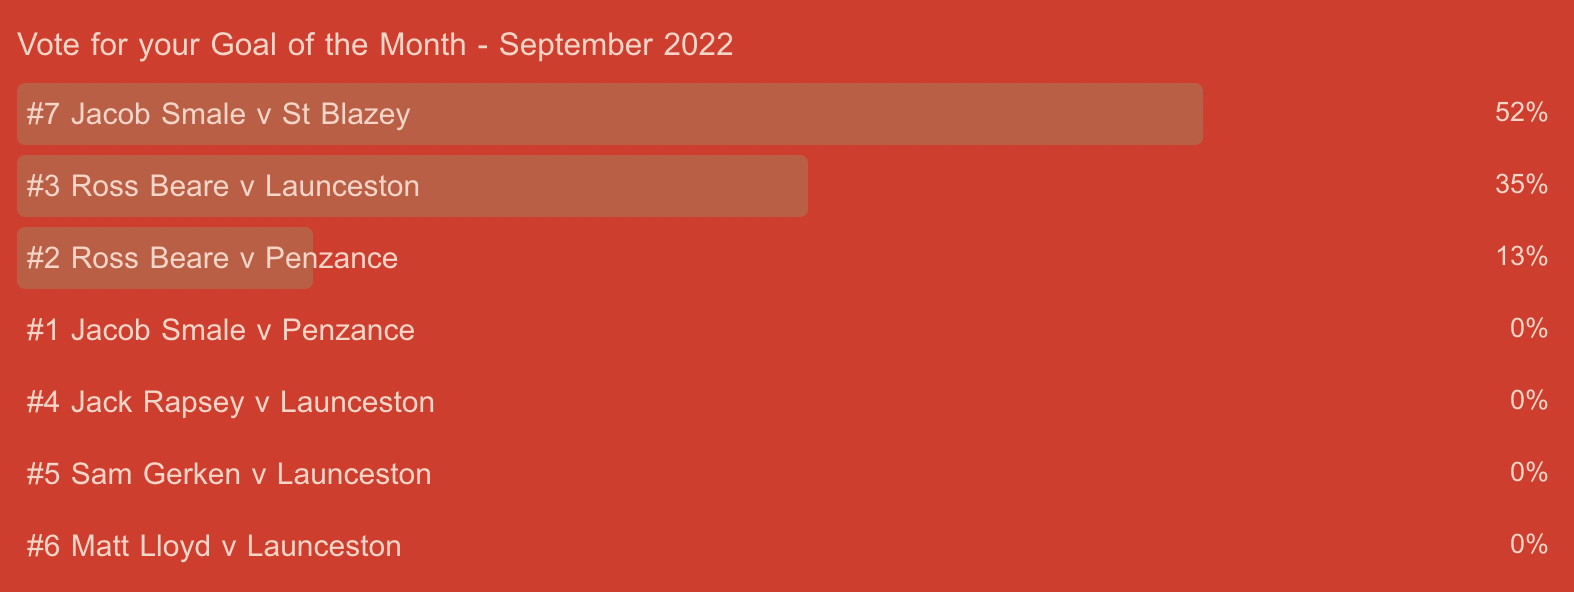 Goal of the Month - September 2022